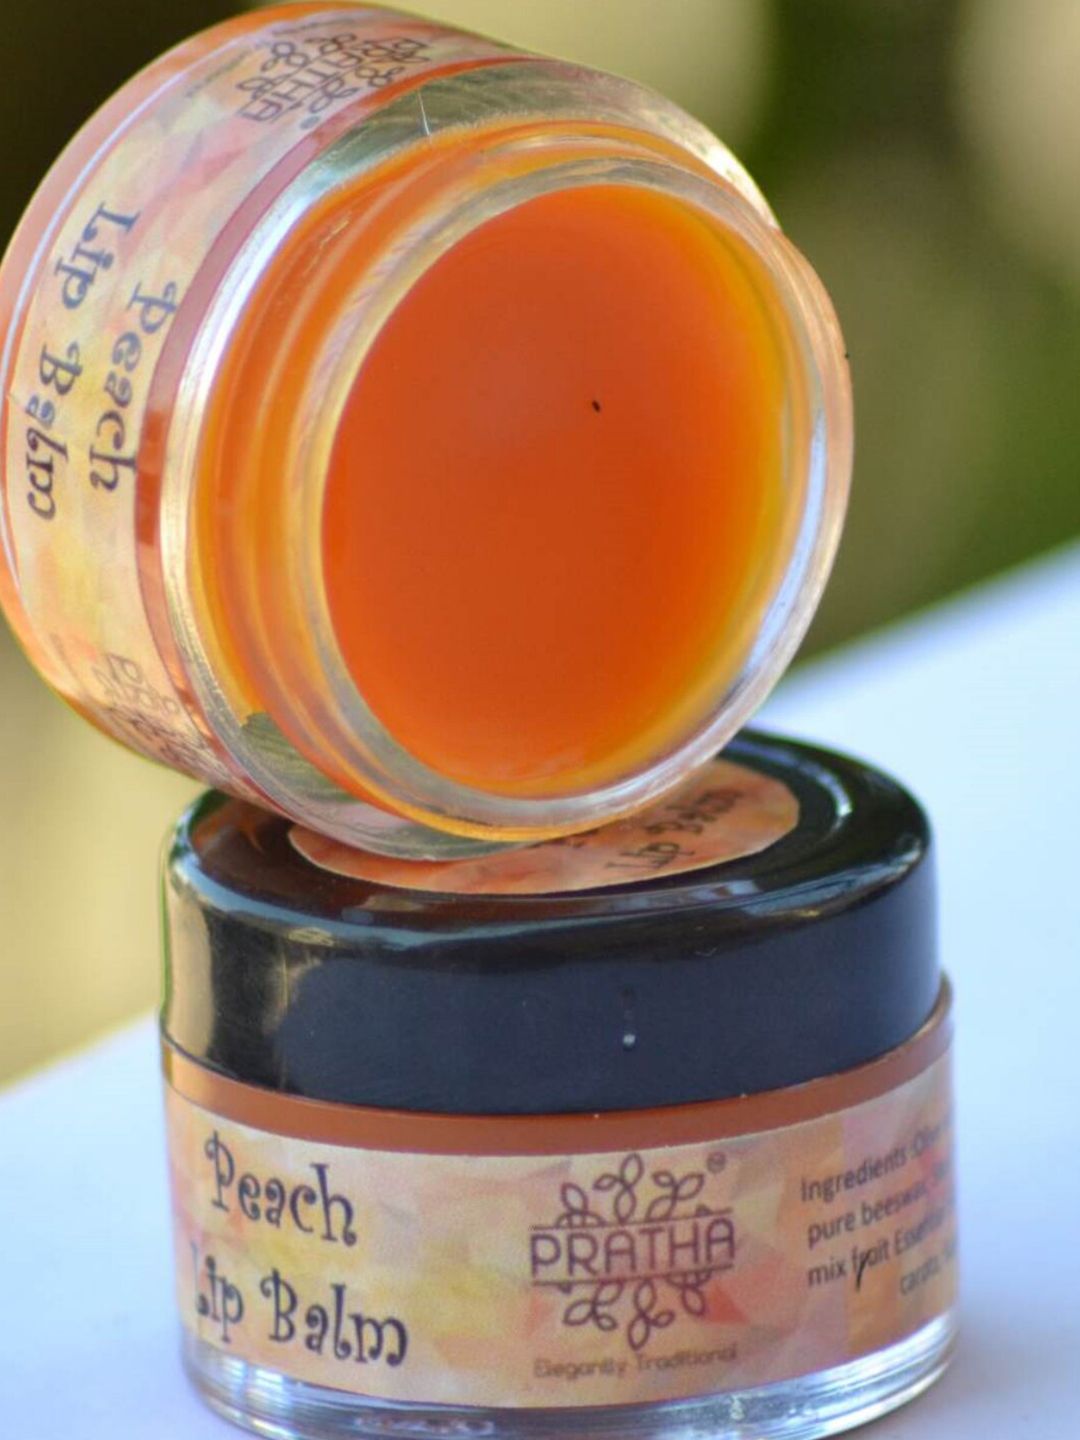 Pratha Natural Lip Balm - Peach Price in India